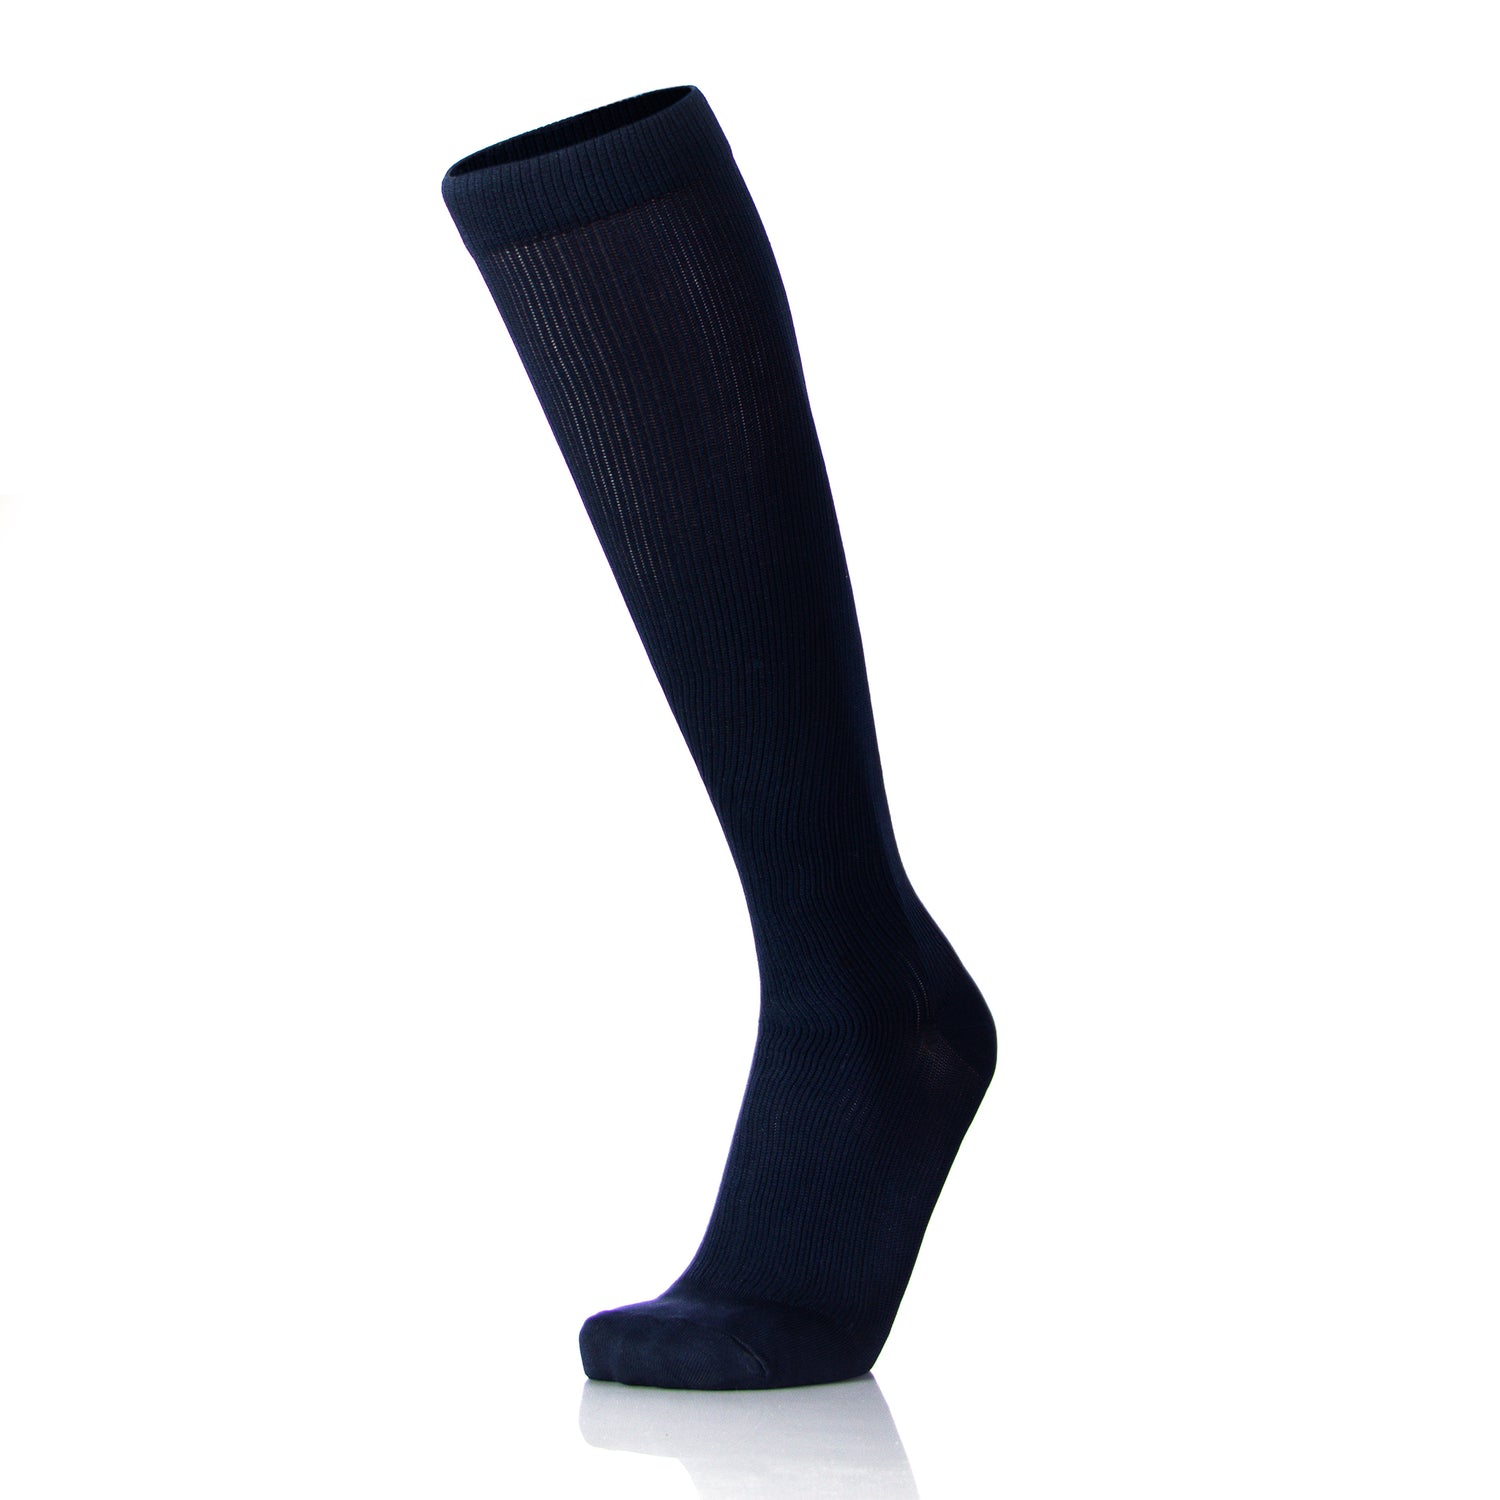 30-40mmHg Medical Graduated Compression Socks for Women&Men